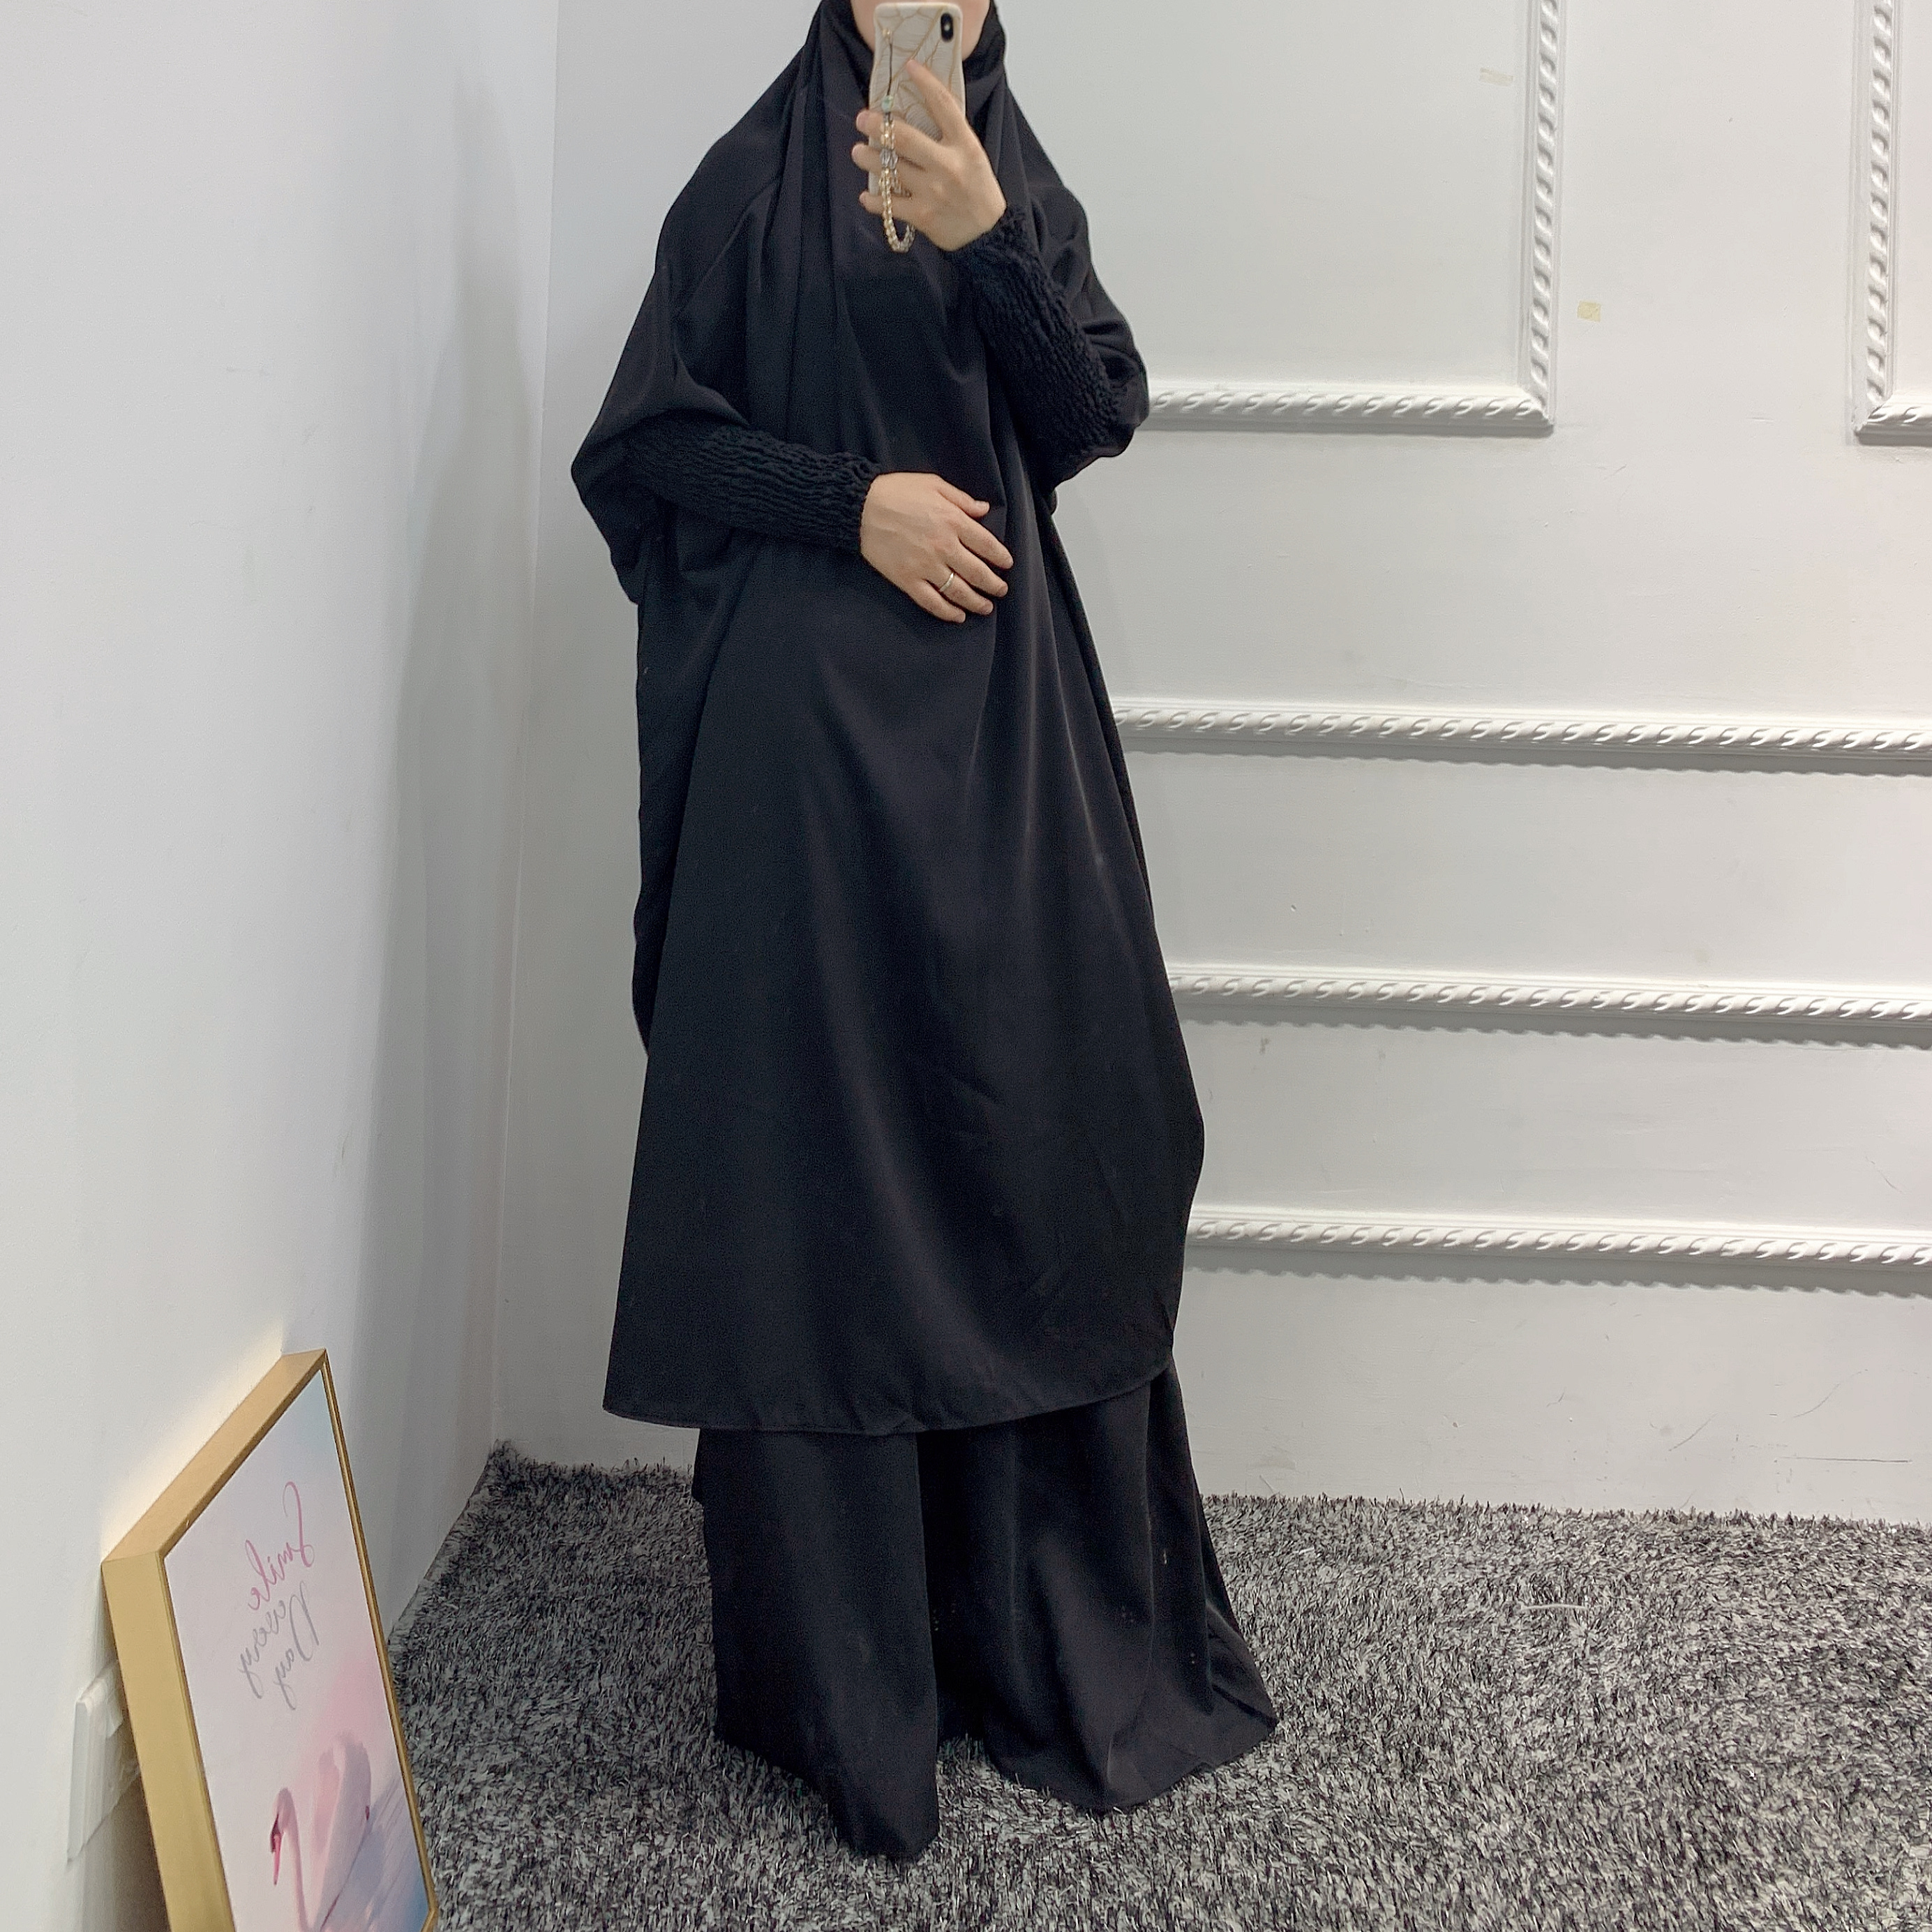 2021 high quality 3pcs Muslim Open Abaya Sets Long Wrap Skirt Women Fashion Dress ethnic Clothing